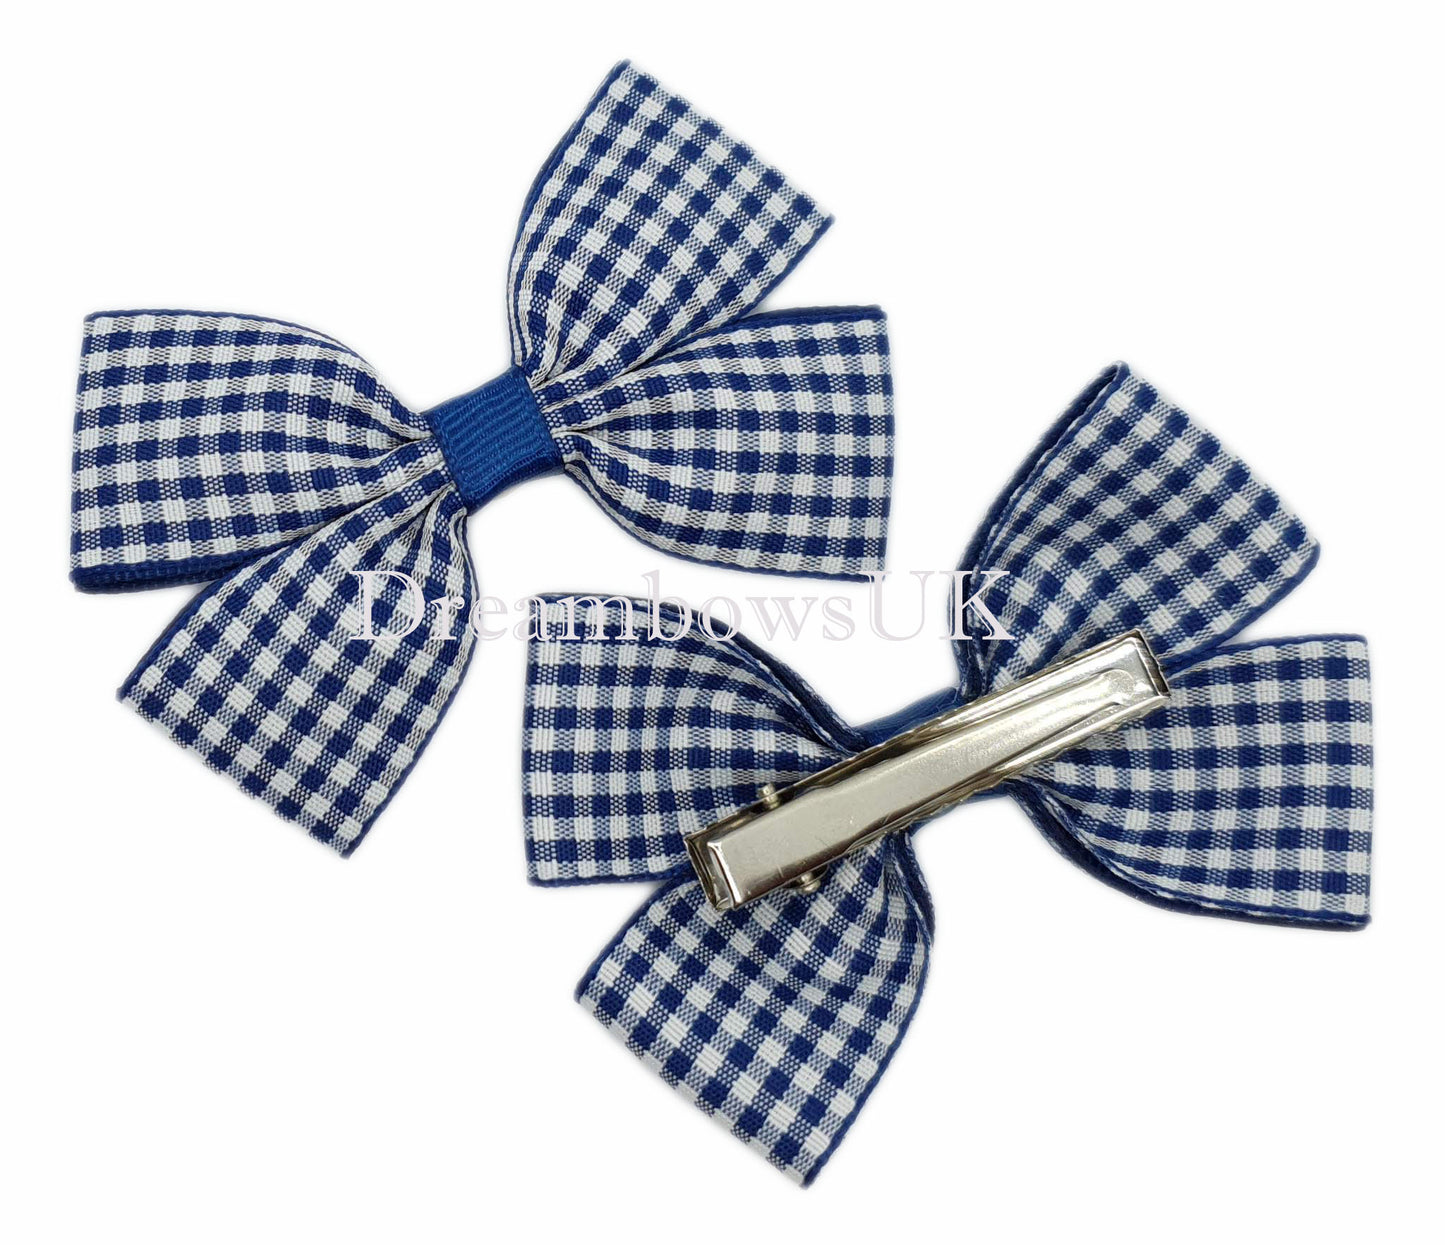 Navy blue gingham ribbon bows on alligator clips